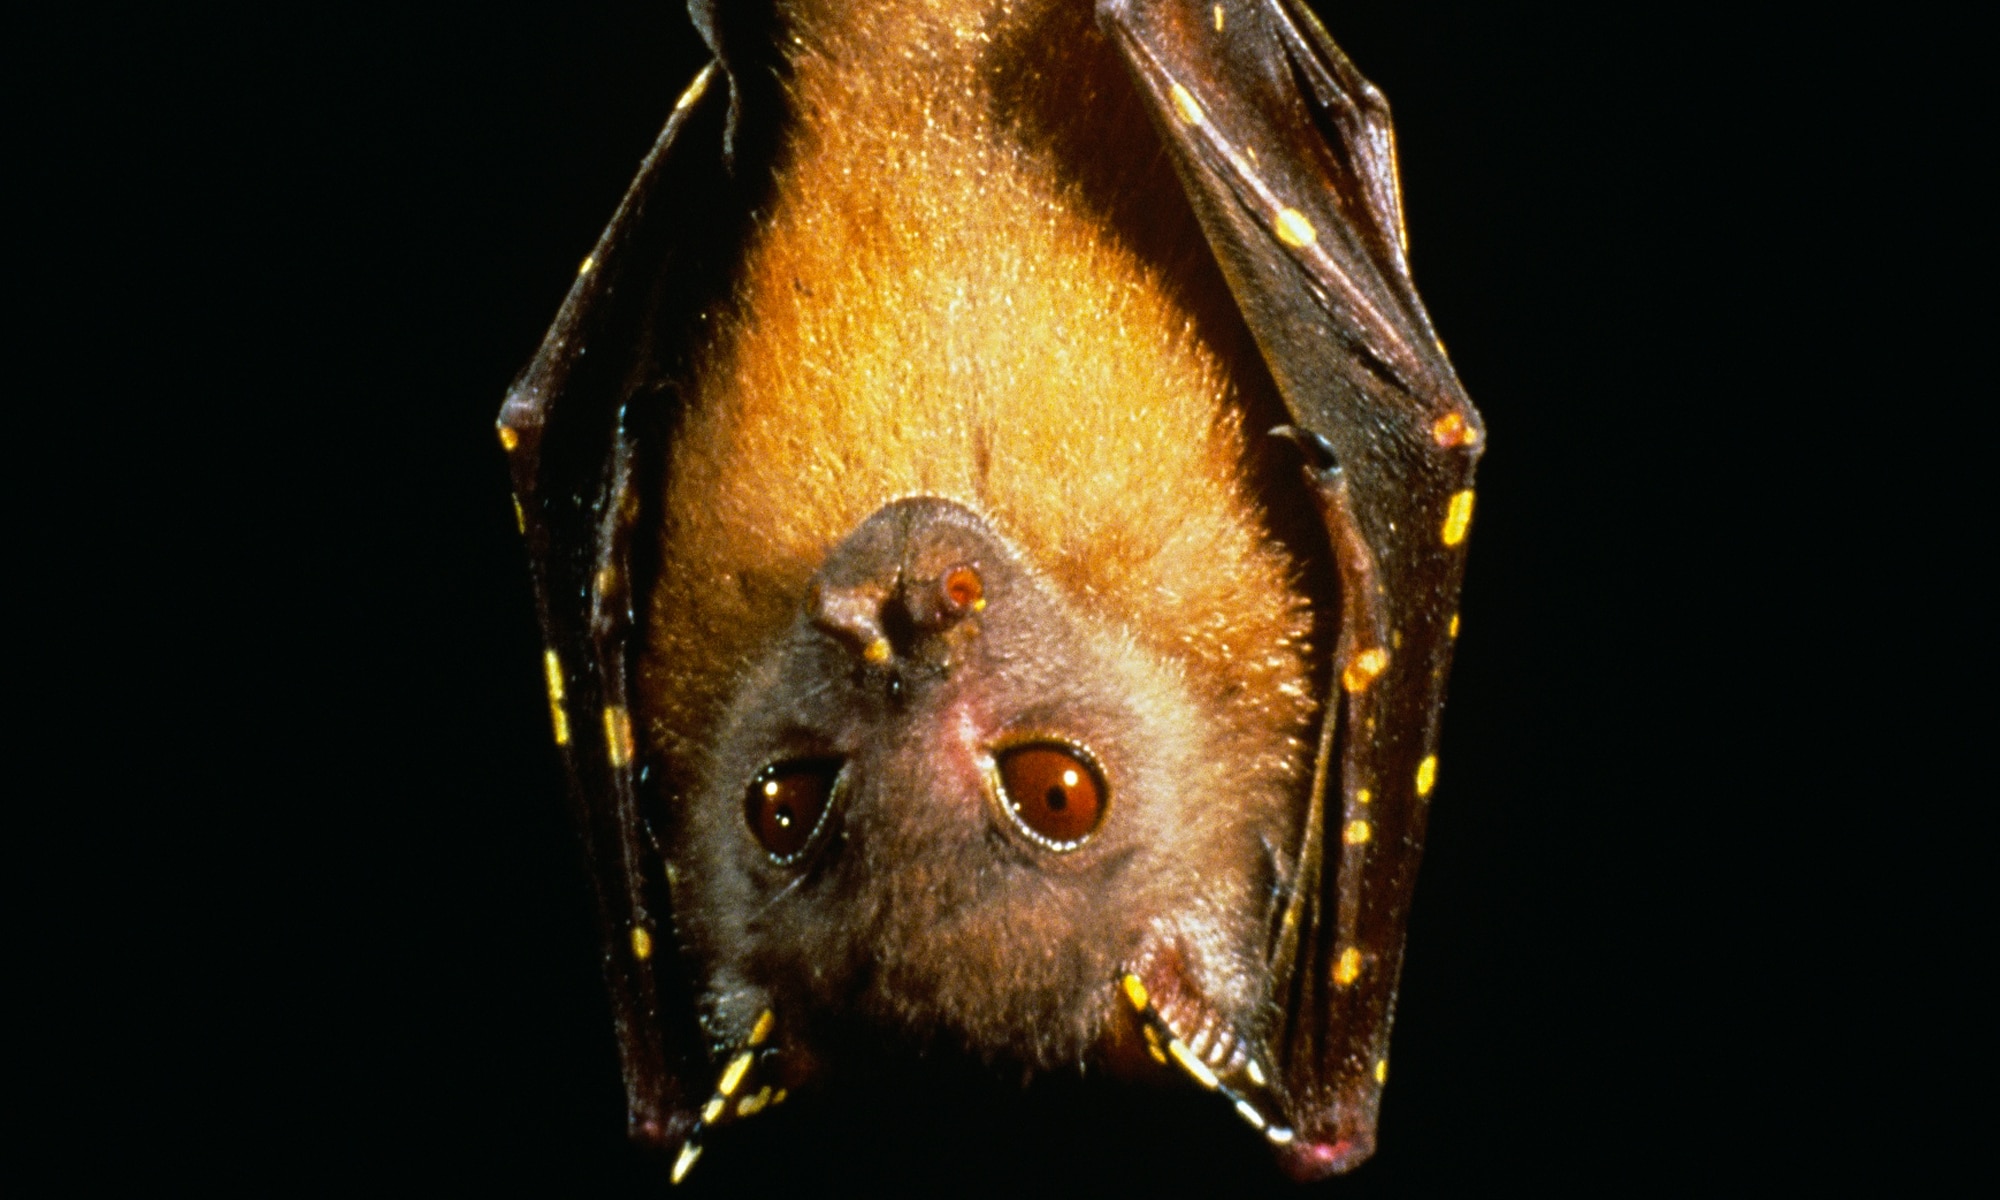 Queensland Tube-nosed Bat